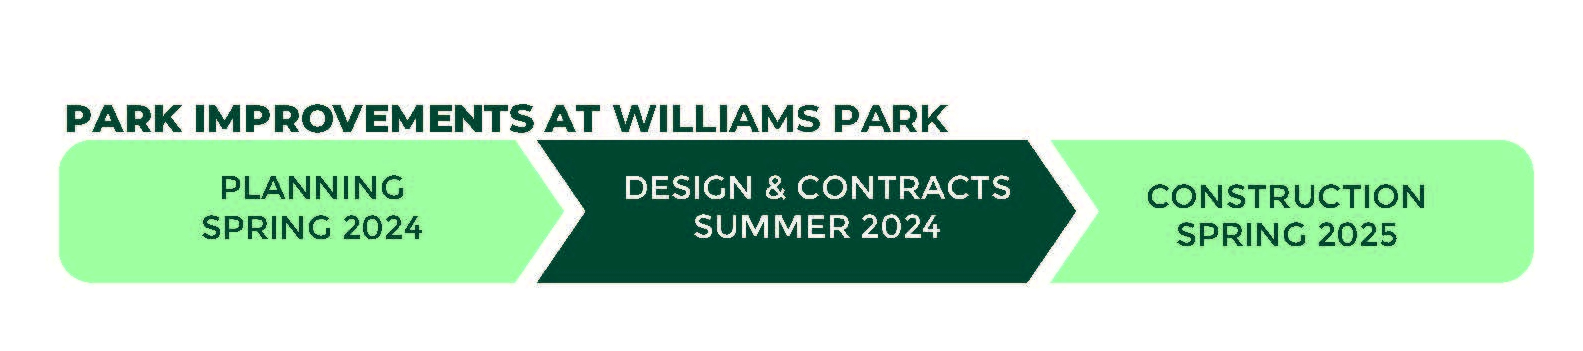 Williams Park Project Timeline